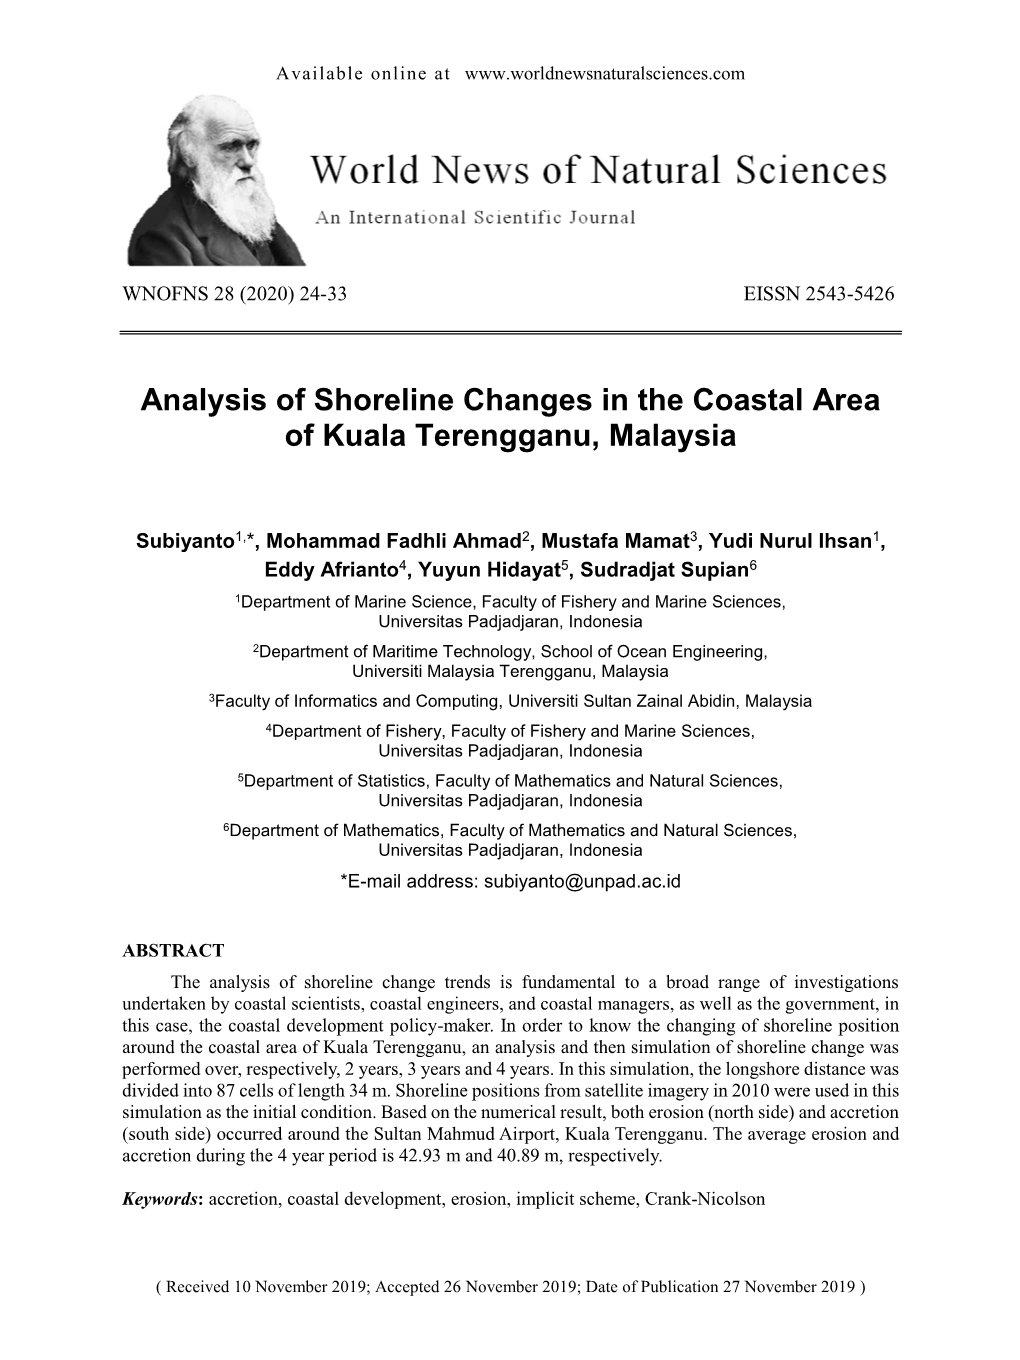 Analysis of Shoreline Changes in the Coastal Area of Kuala Terengganu, Malaysia